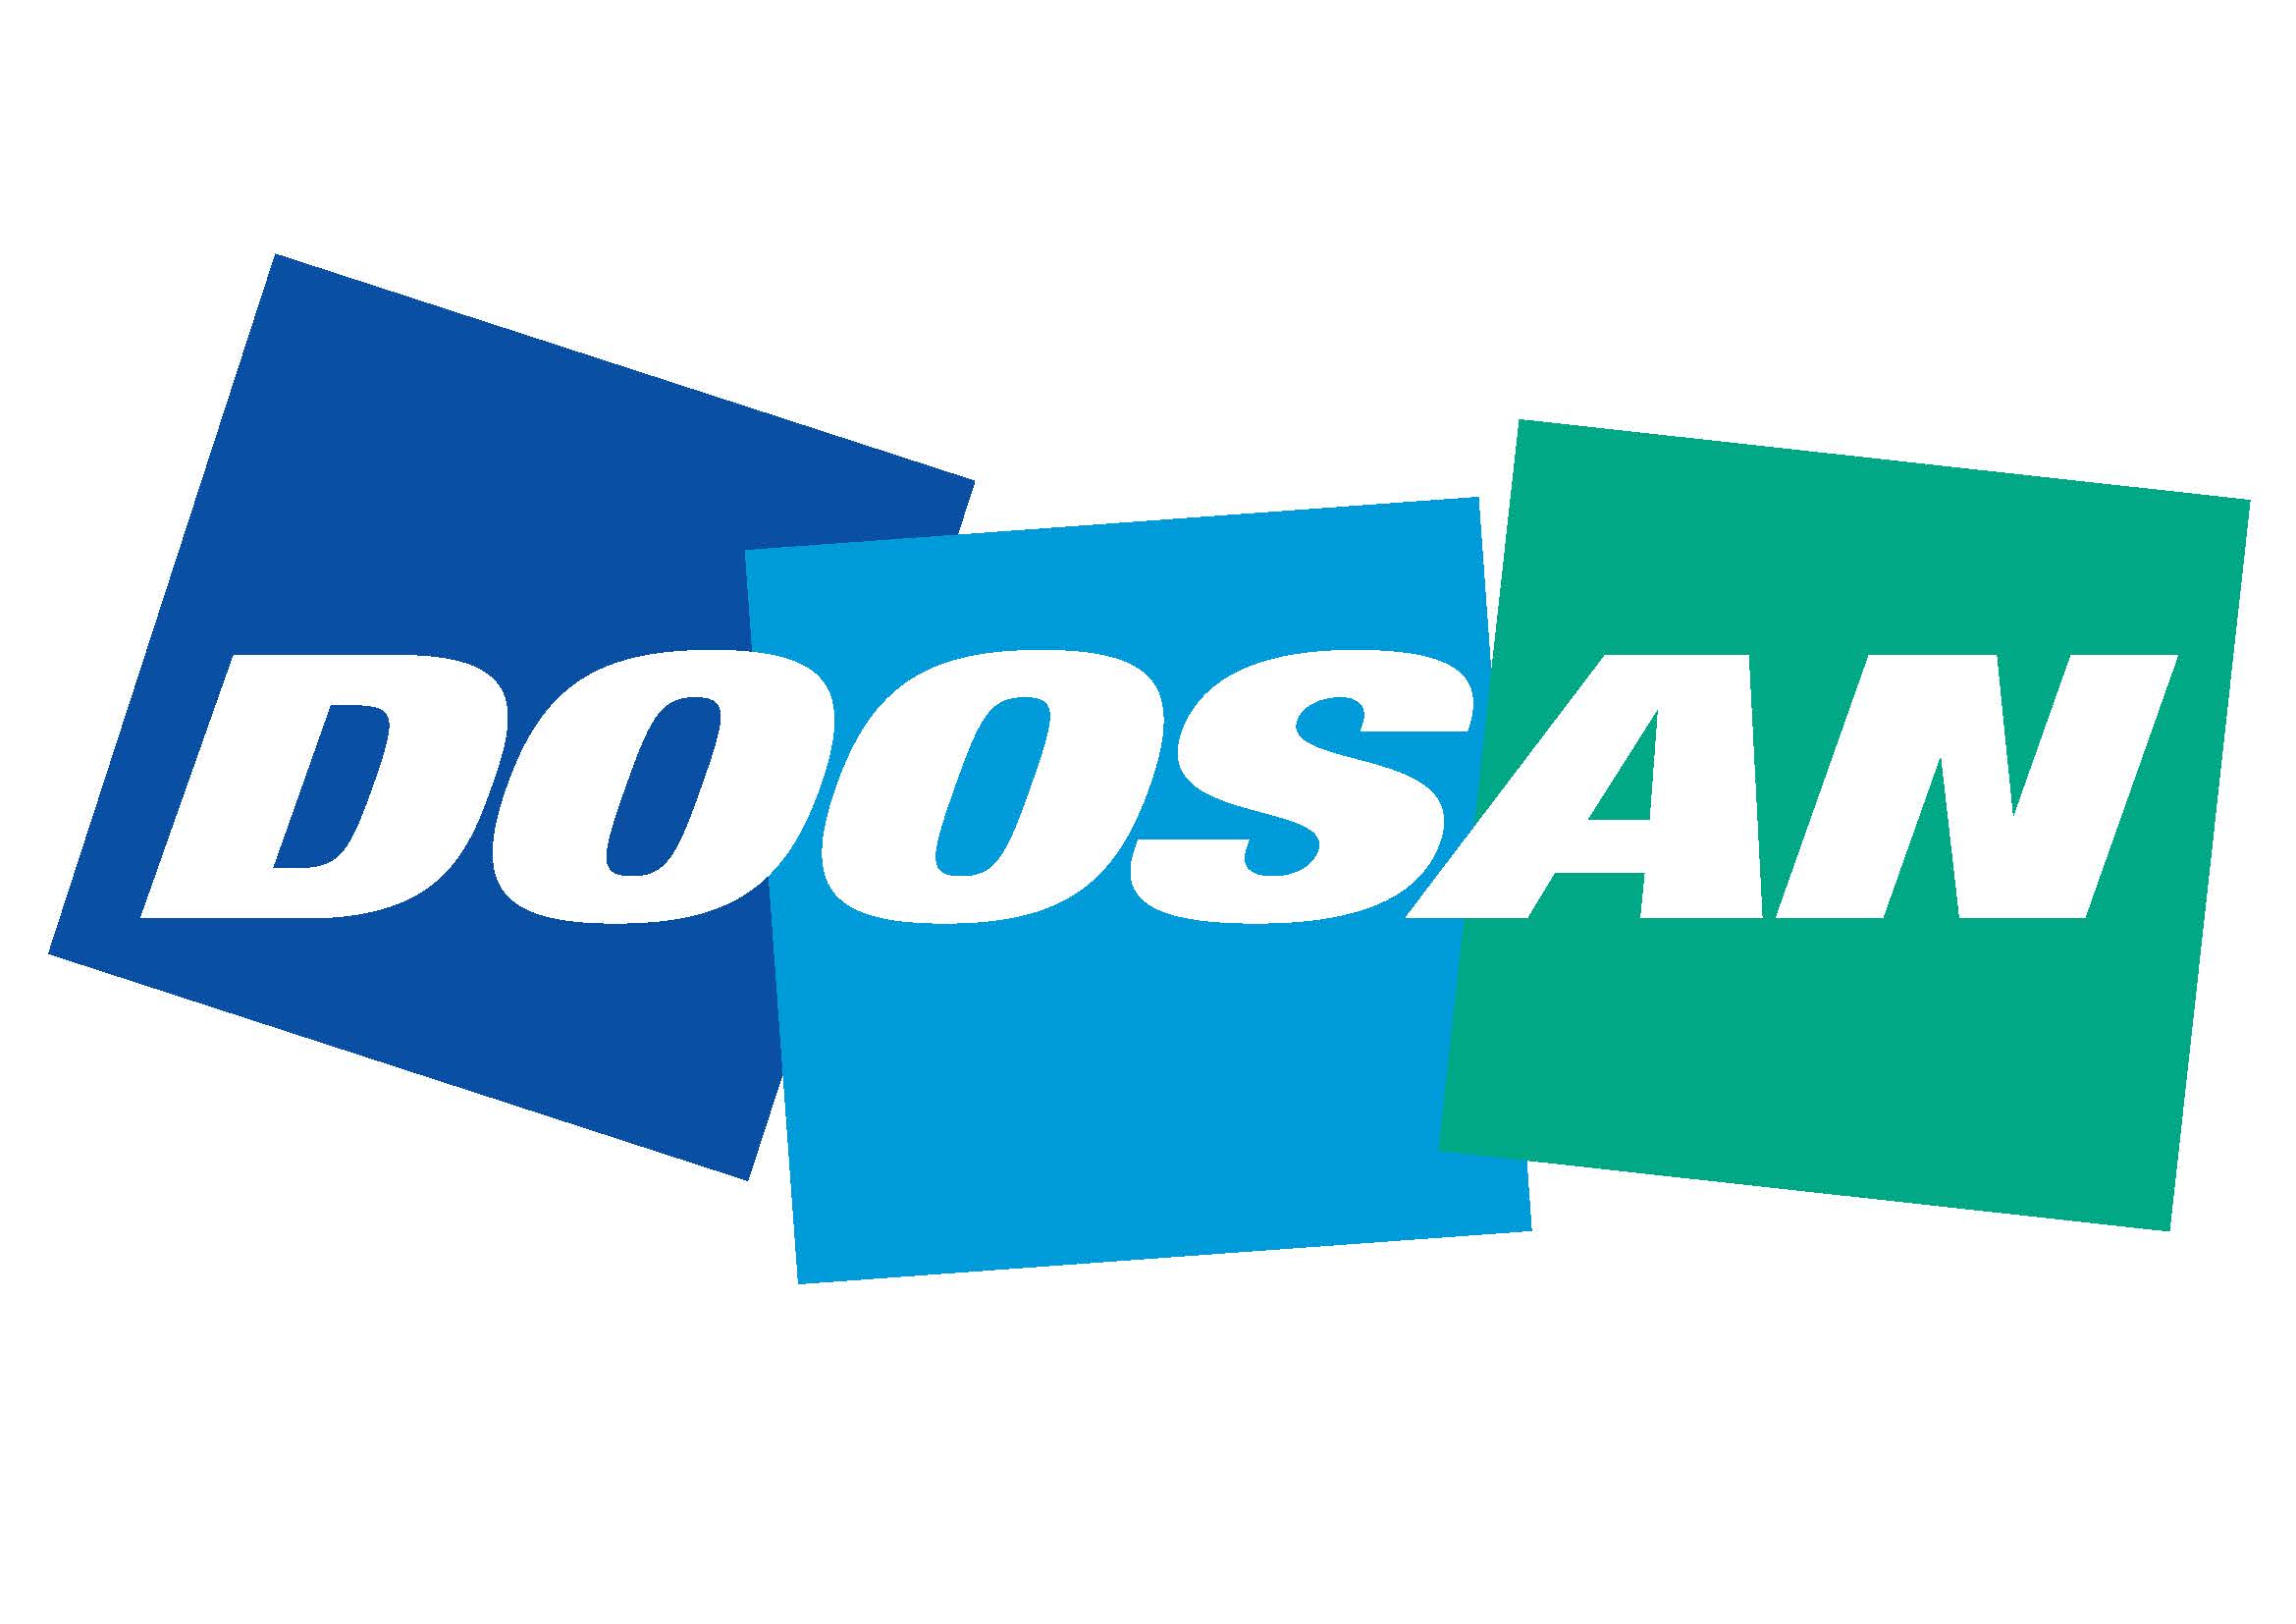 Doosan_logo